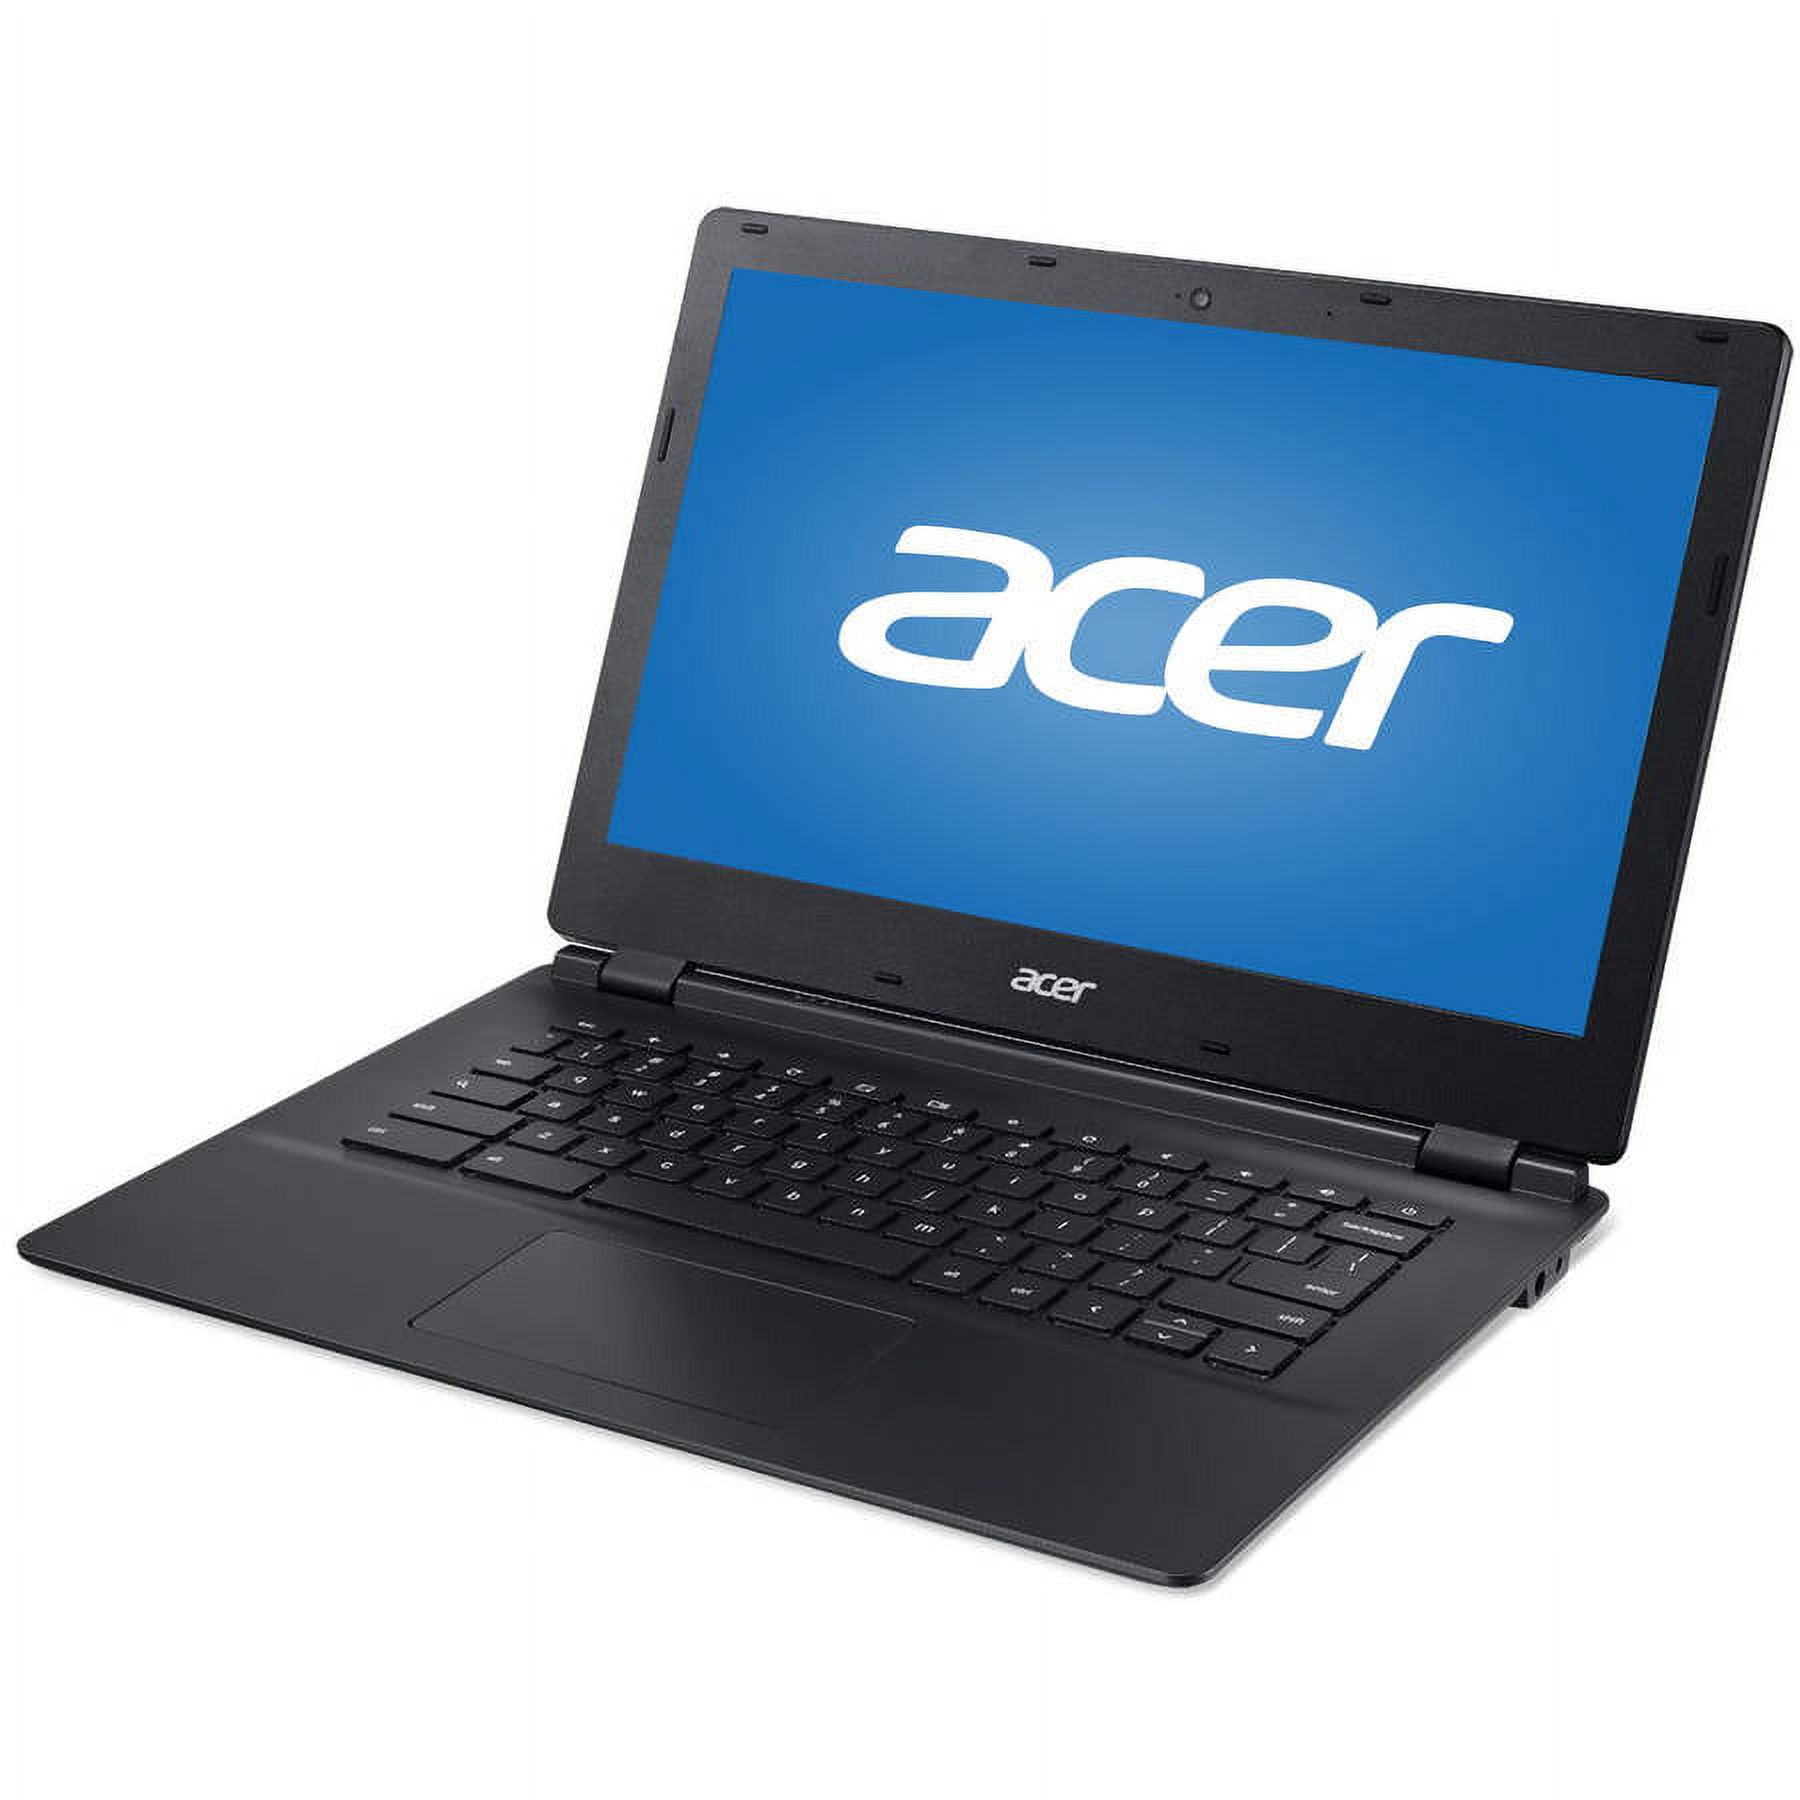 Acer Chromebook 13 C810-T7ZT - 13.3" - Tegra K1 CD570M-A1 - 4 GB RAM - 16 GB SSD - image 2 of 4